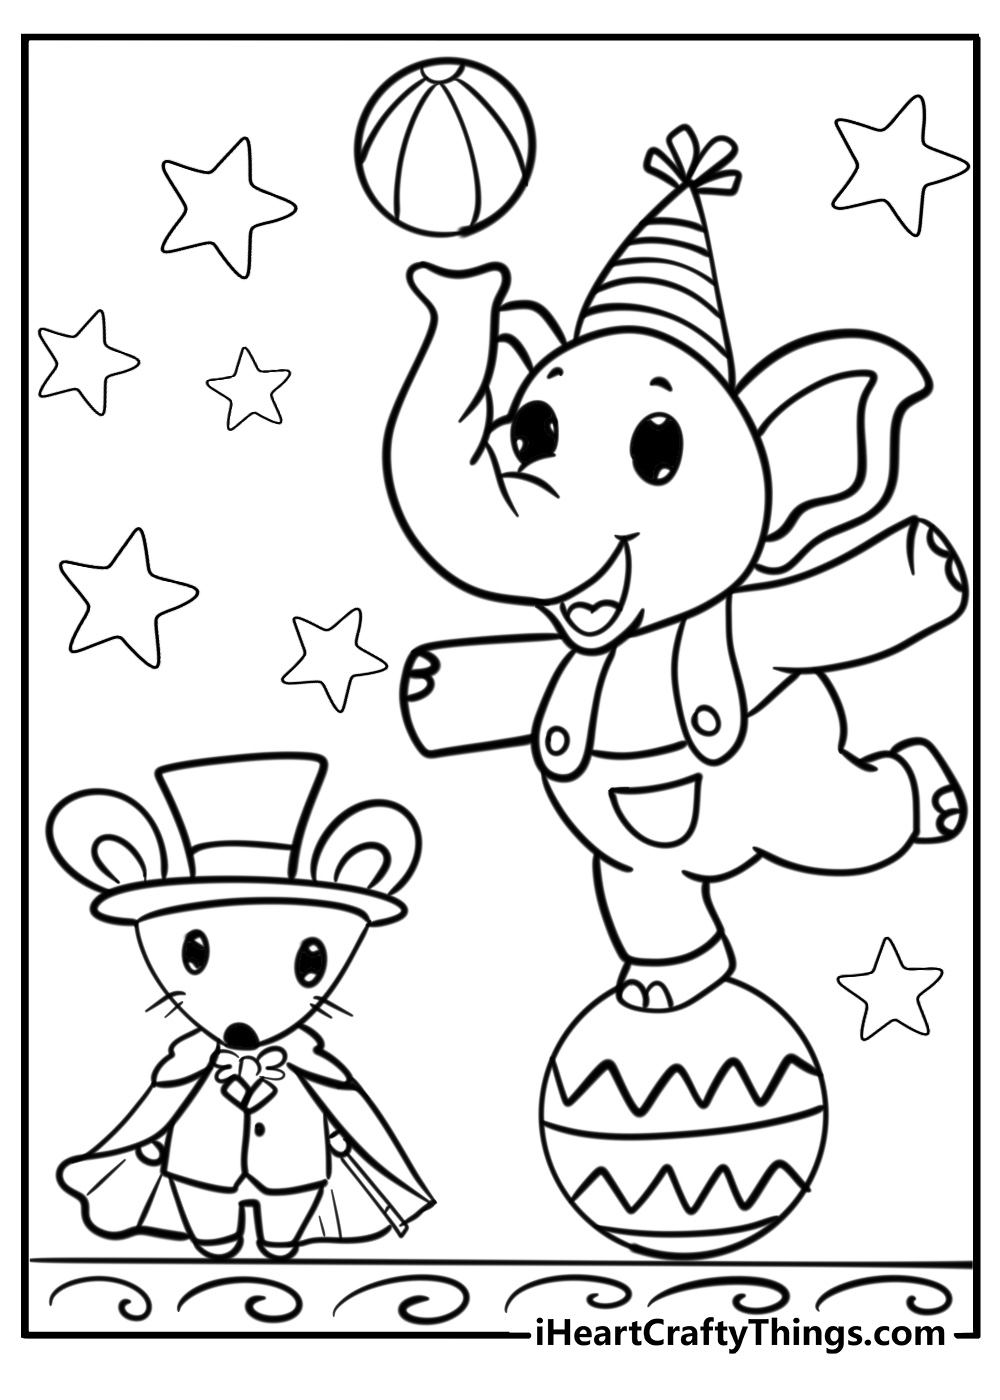 Circus coloring page of kawaii magician mouse and balancing elephant for kids